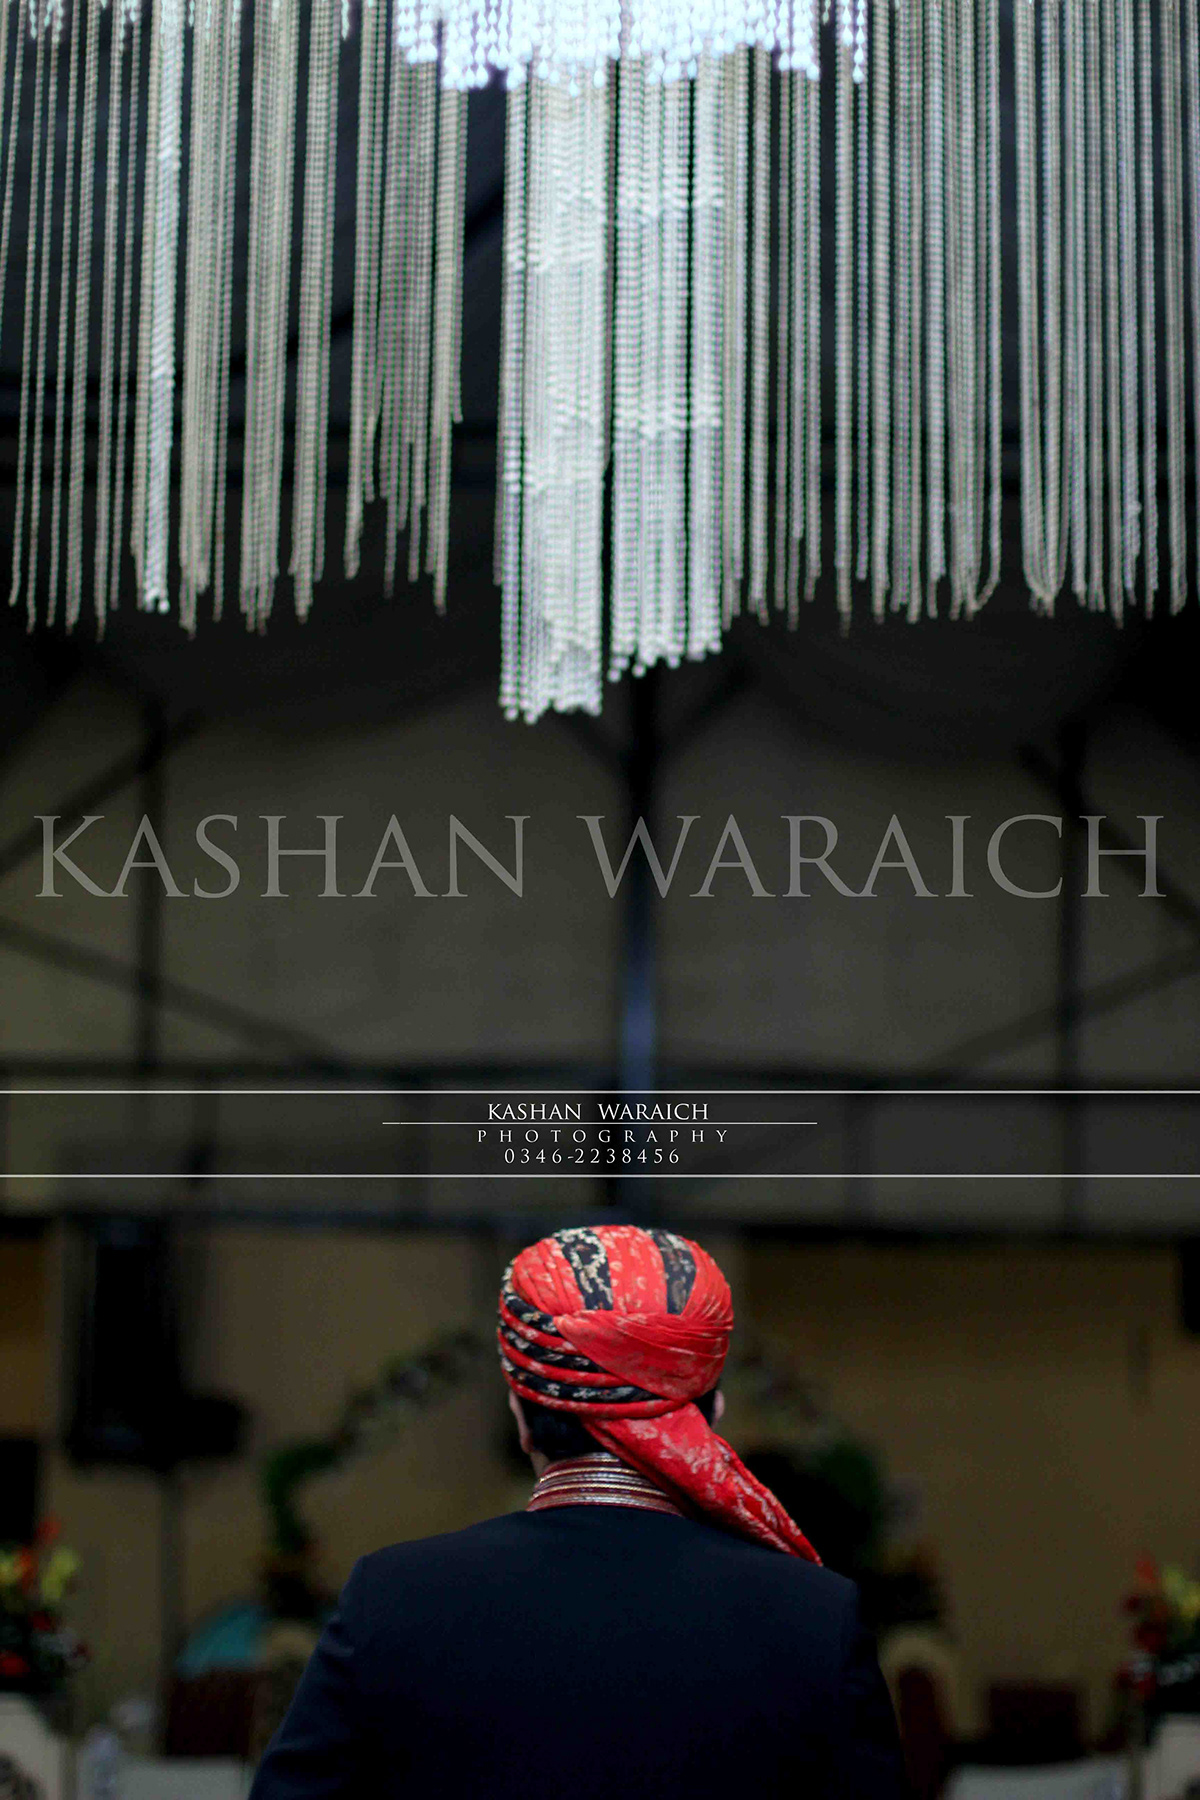 www.facebook.com/kashanwaraichstudio